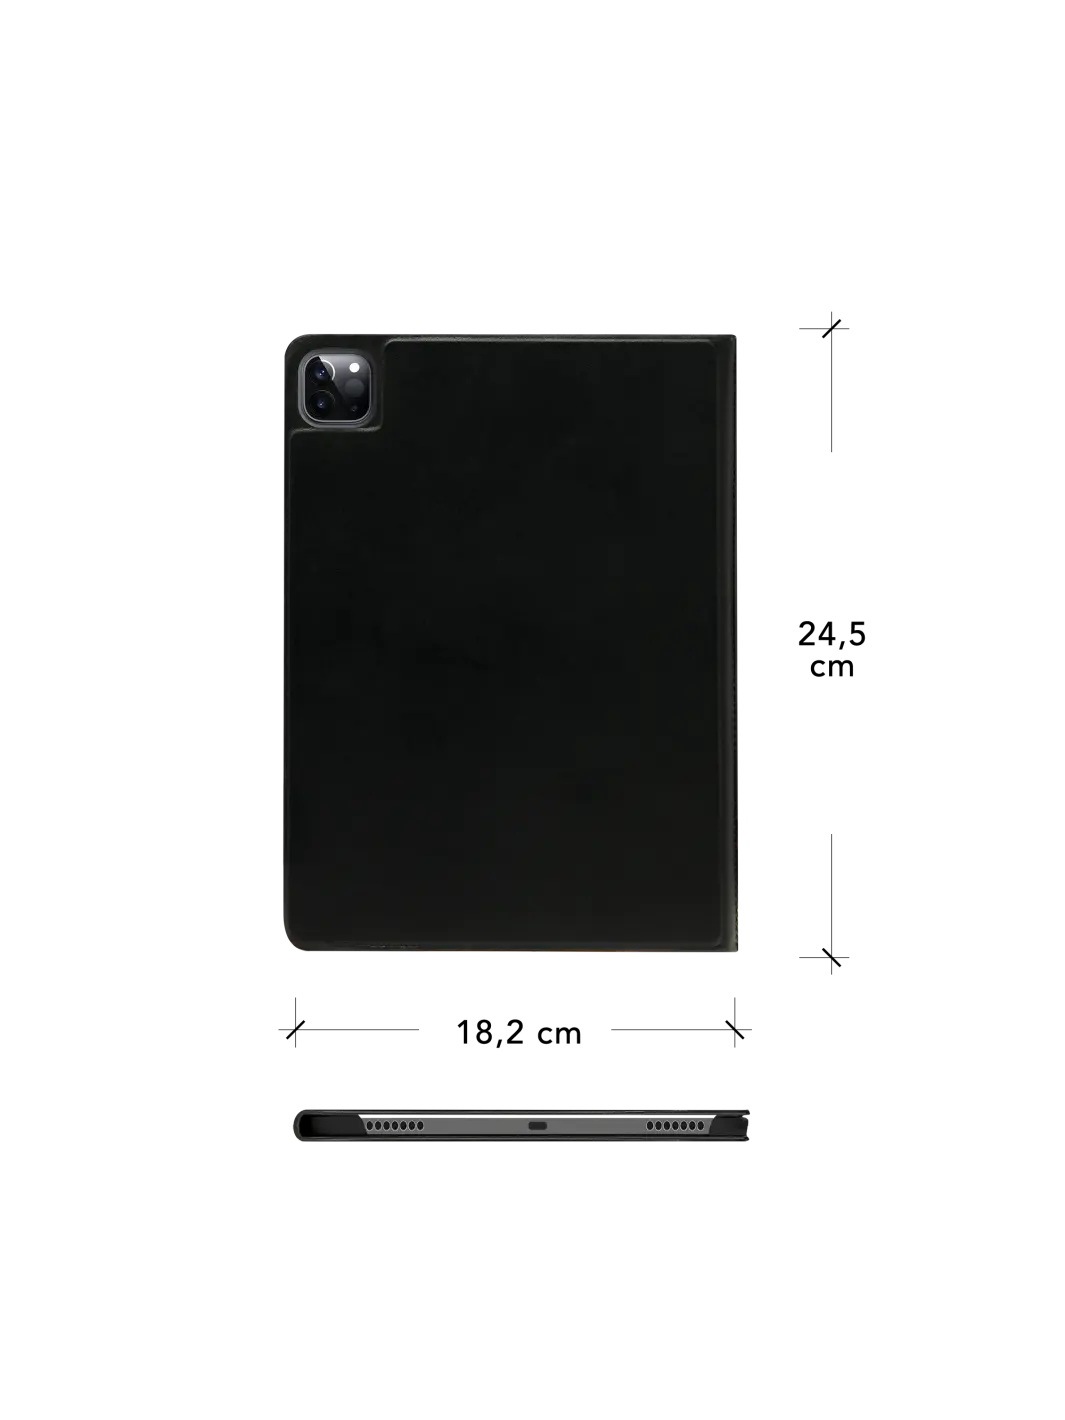 Risskov iPad case Black iPad 10.2" (7 8 9th Gen) iPad Cases